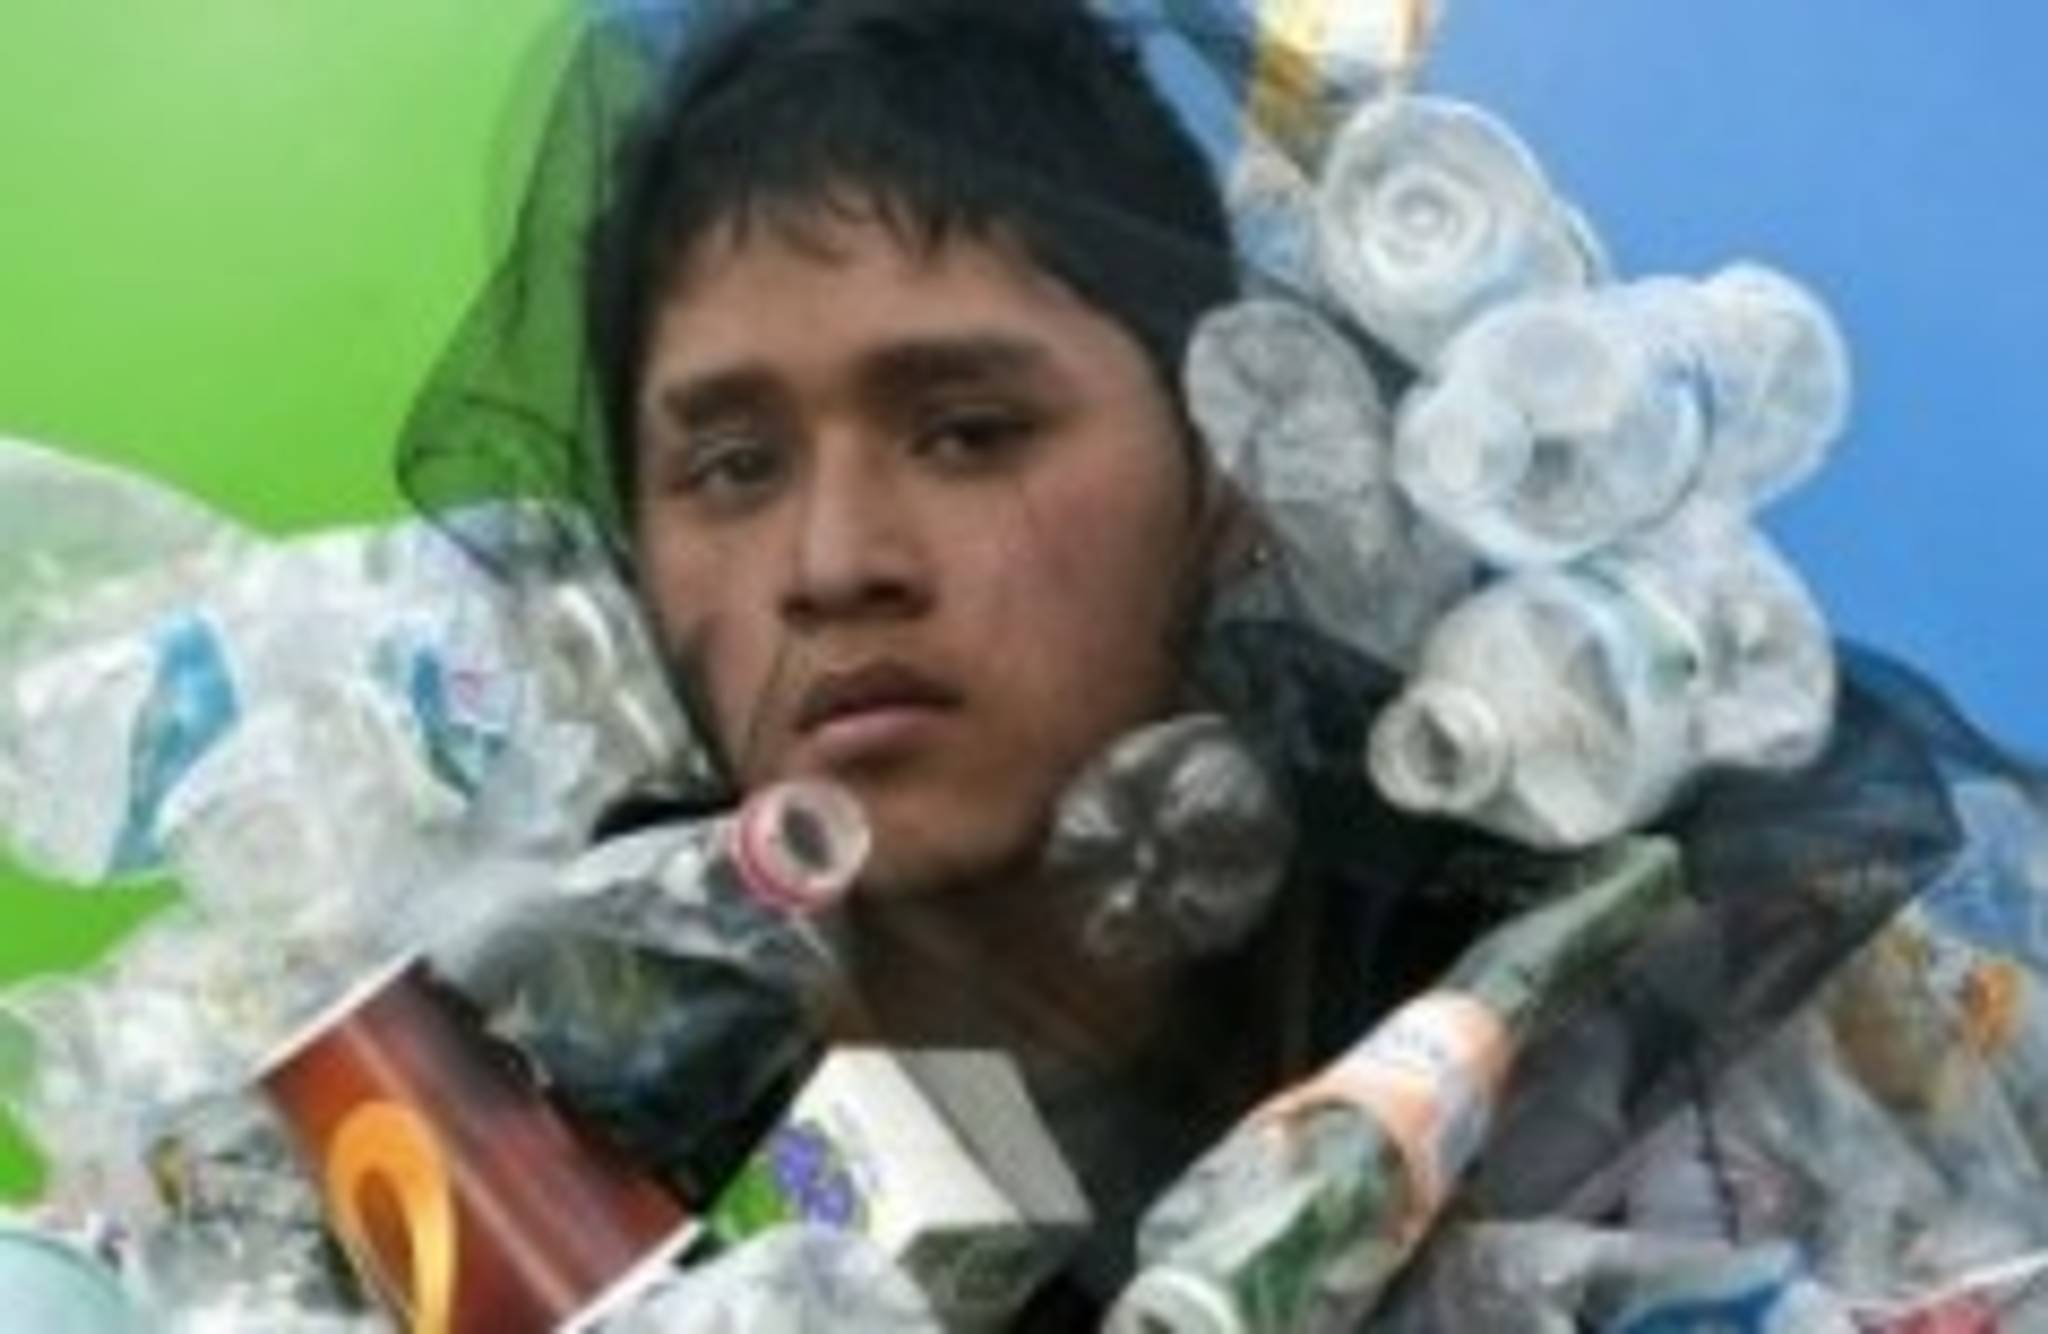 Mexico City: rewarding recycling